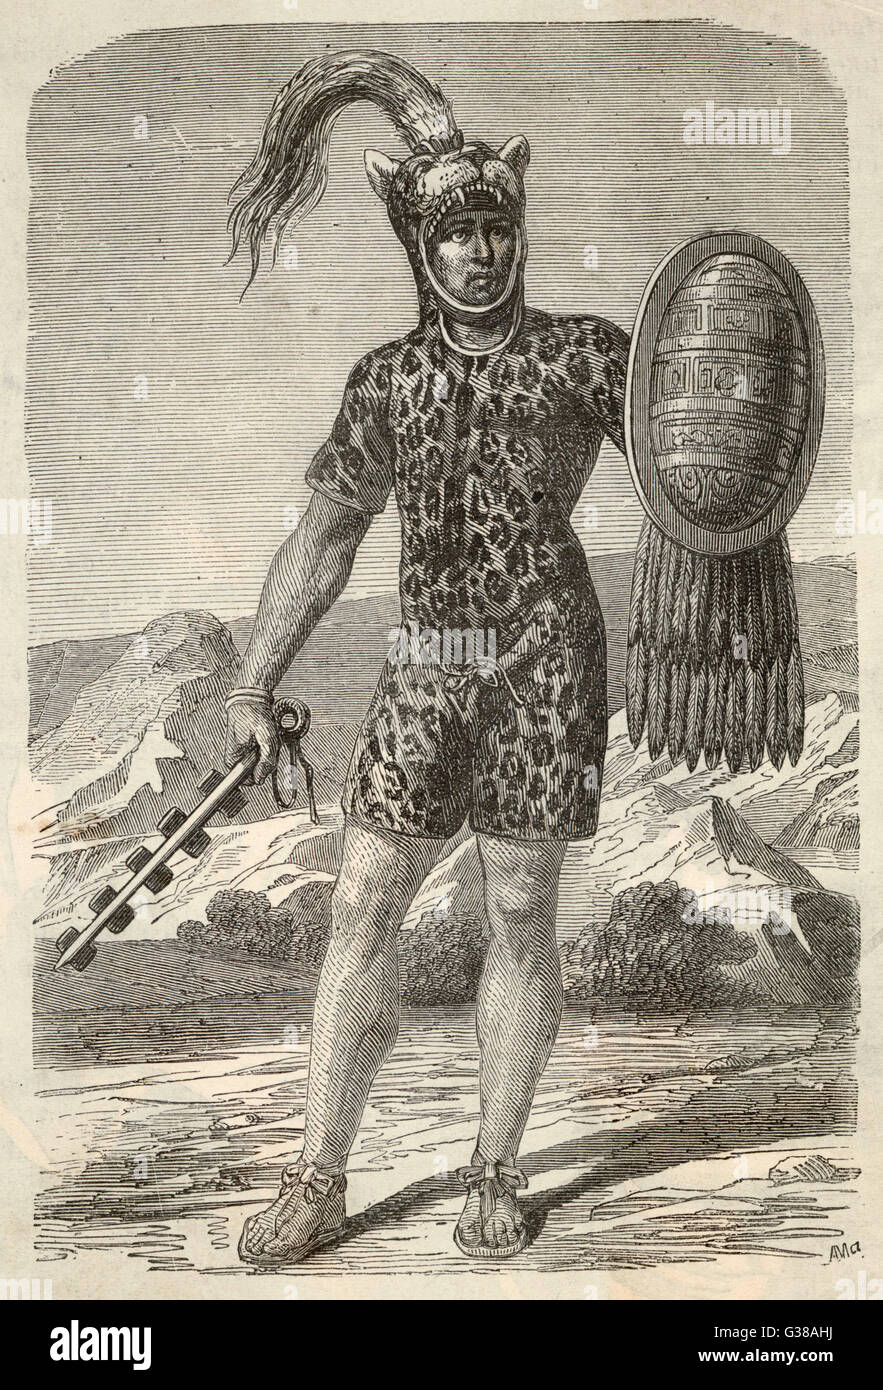 EMPEROR ITZCOATL son of Acamapichtli Ruler of Tenochtitlan, by his ...